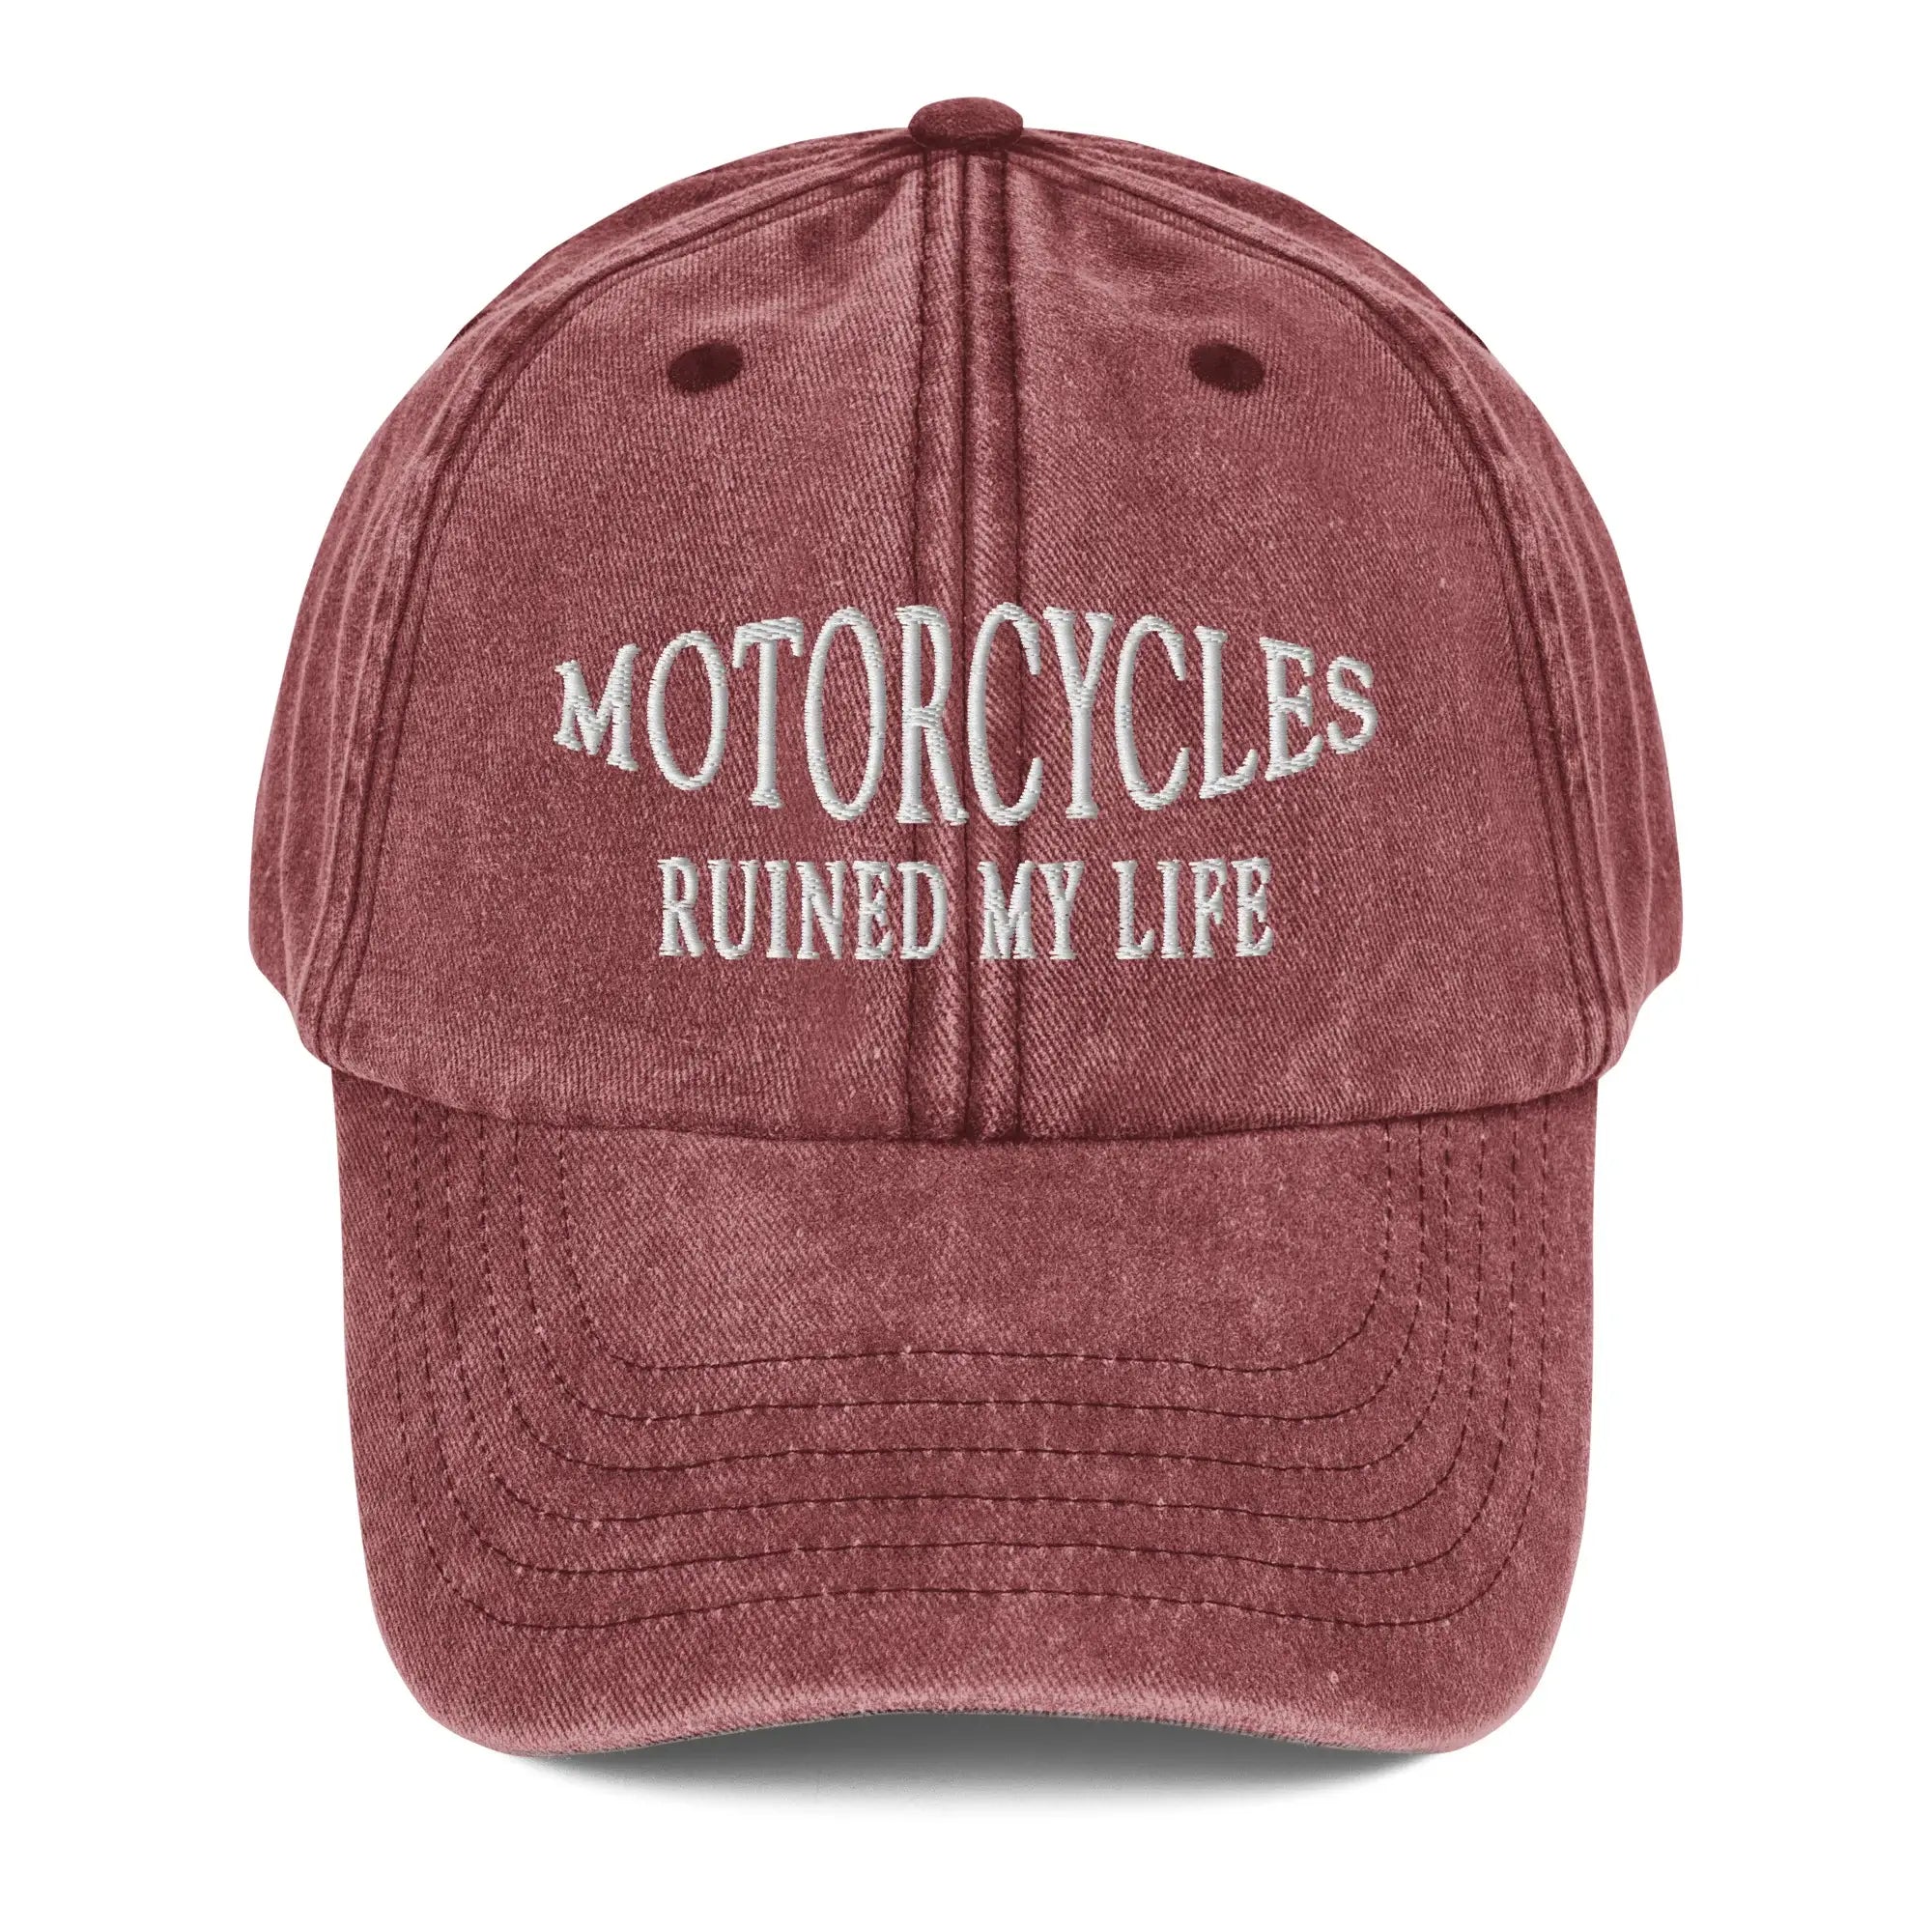 Motorcycles Ruined My Life {Vintage Cap}